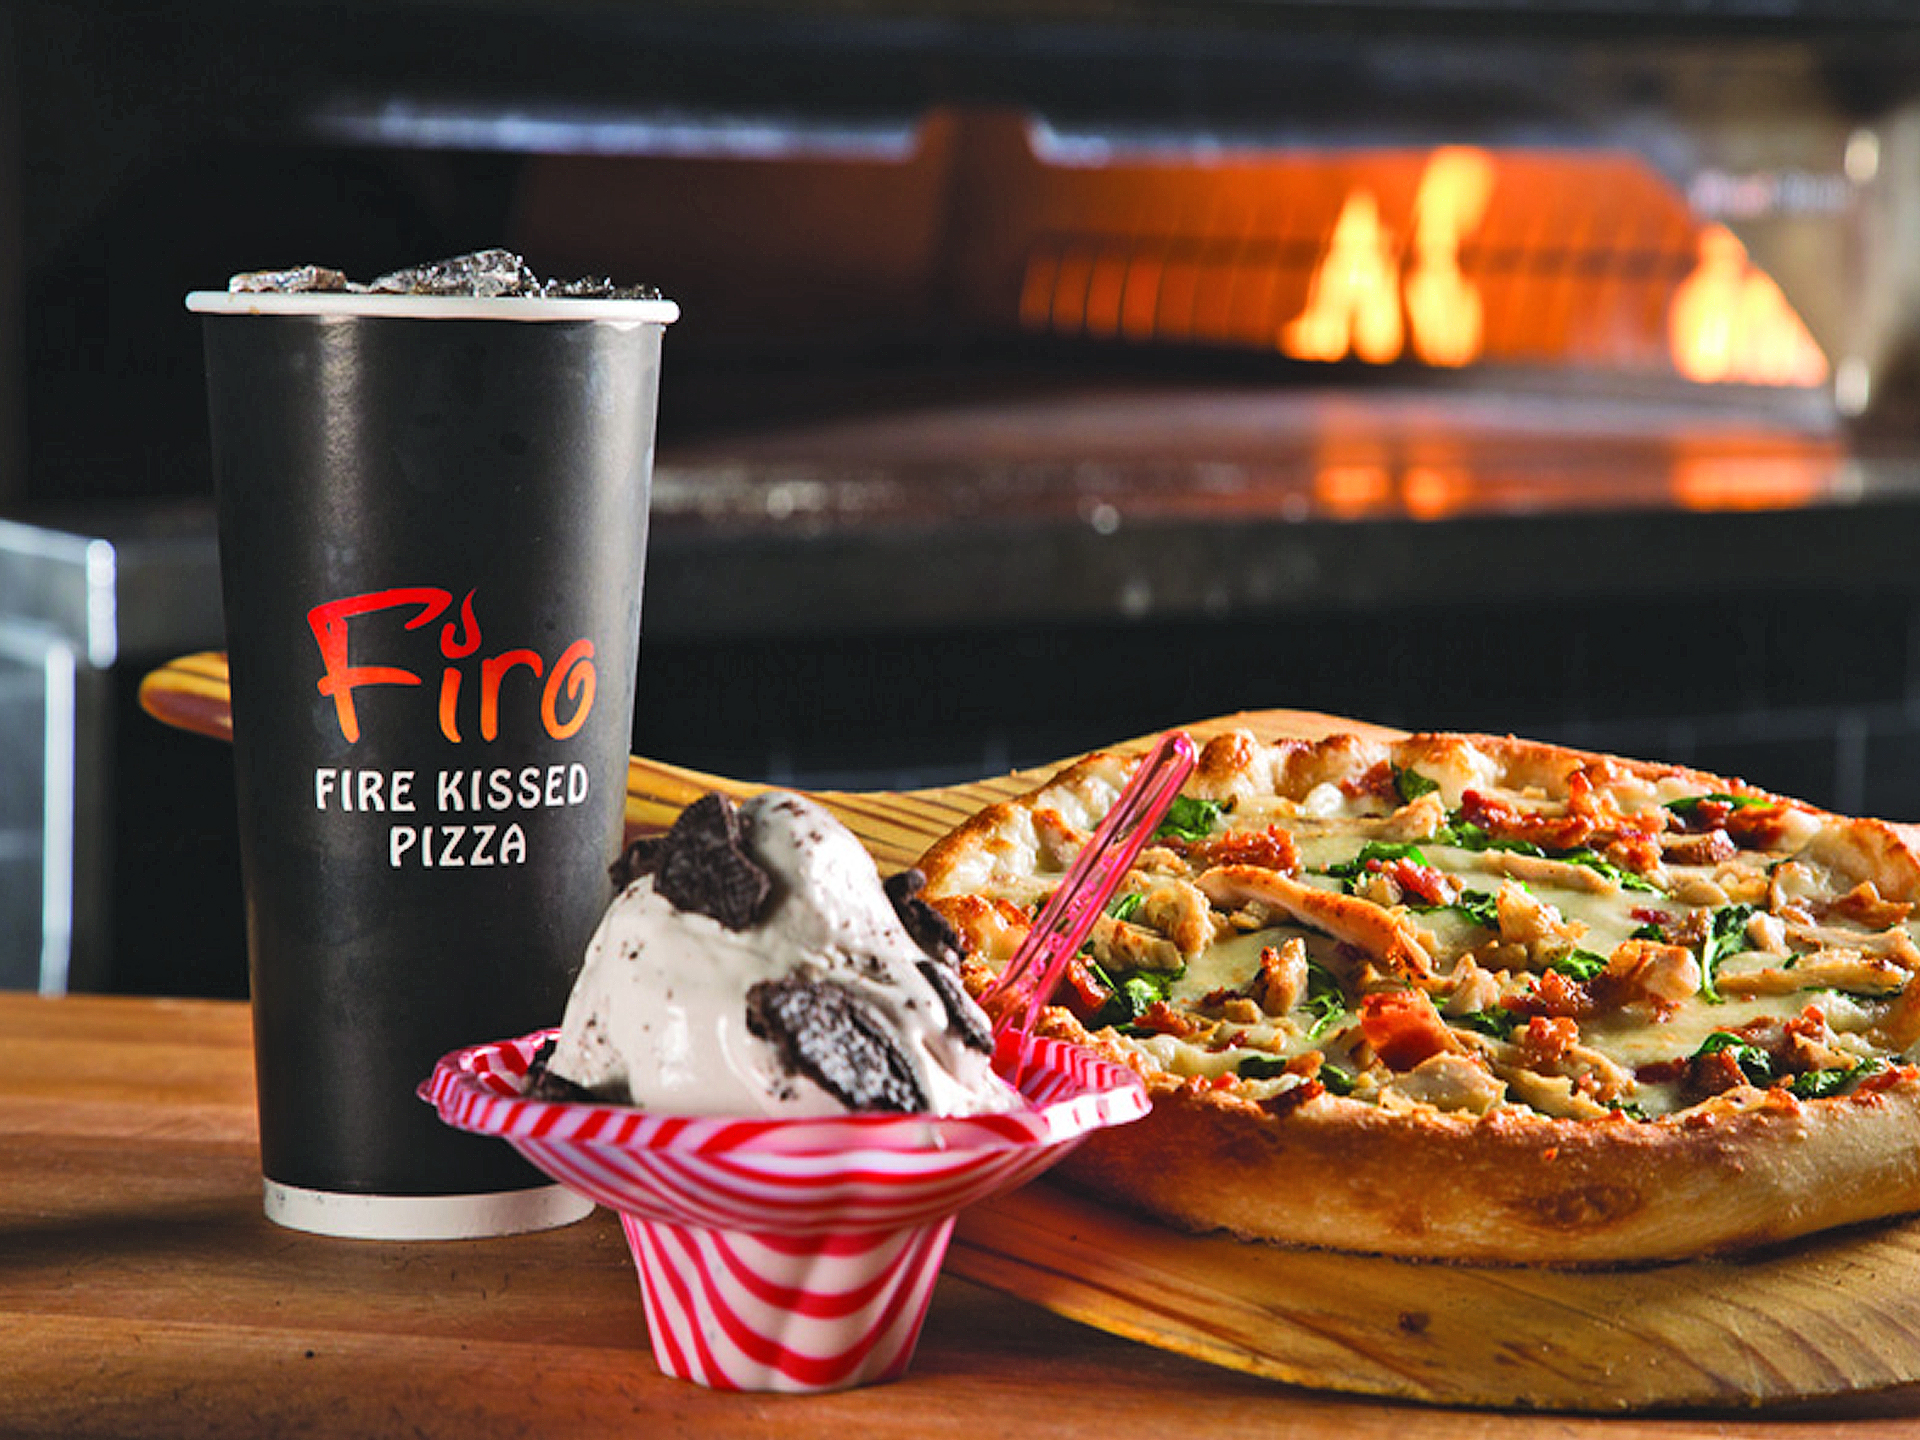 Firo Fire Kissed Pizza 3